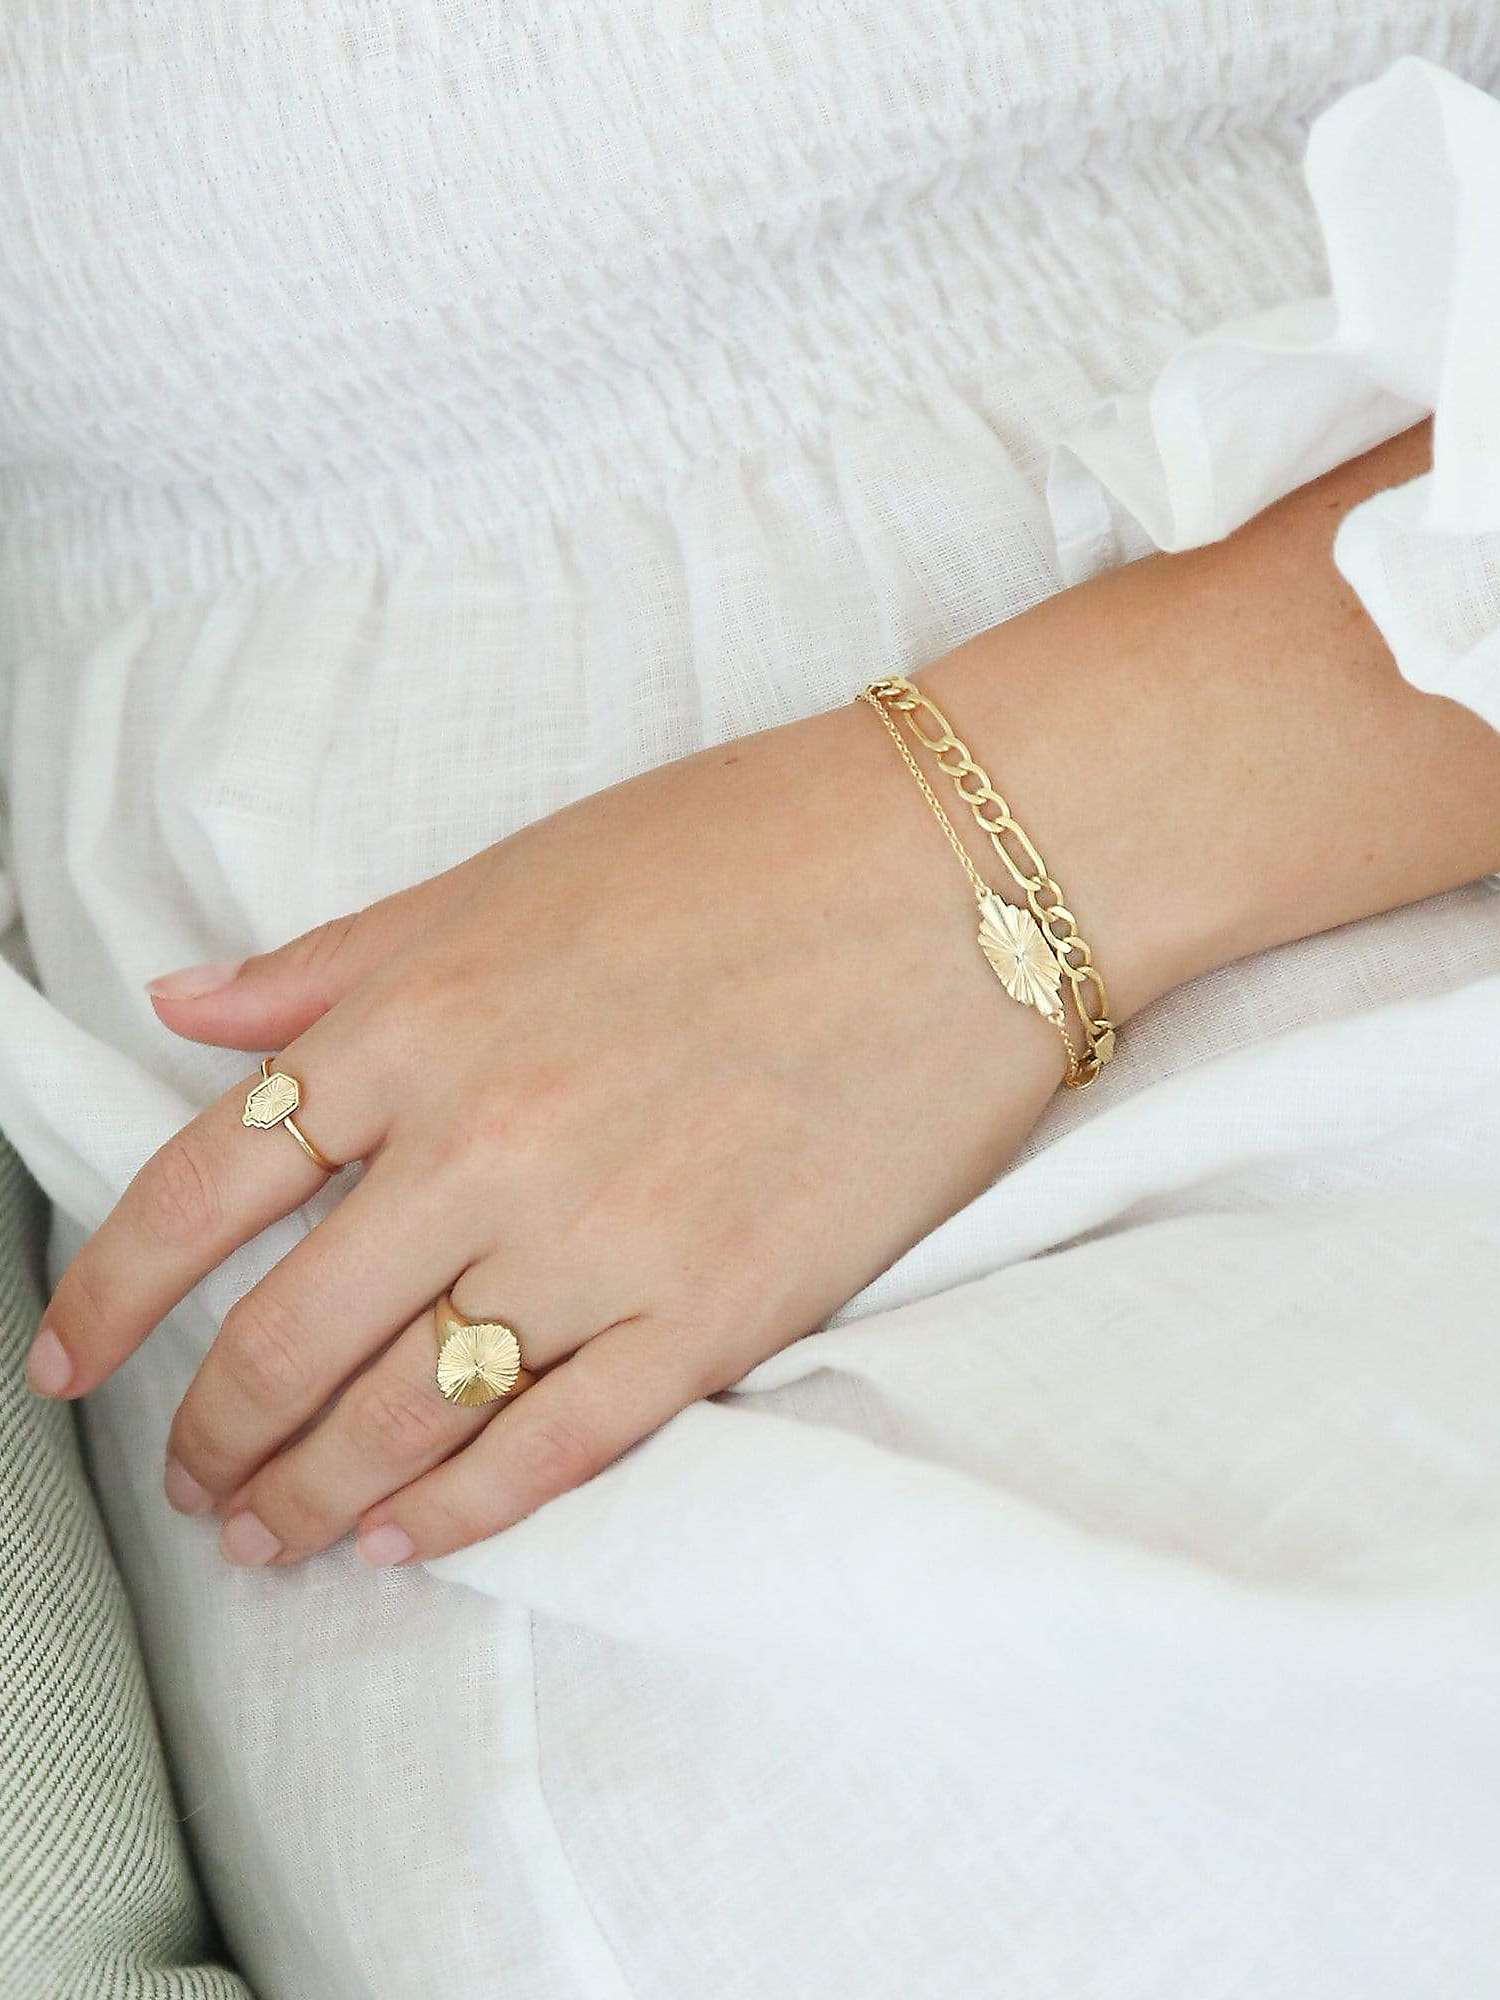 Buy Daisy London Estée Lalonde Sunburst Signet Ring, Gold Online at johnlewis.com